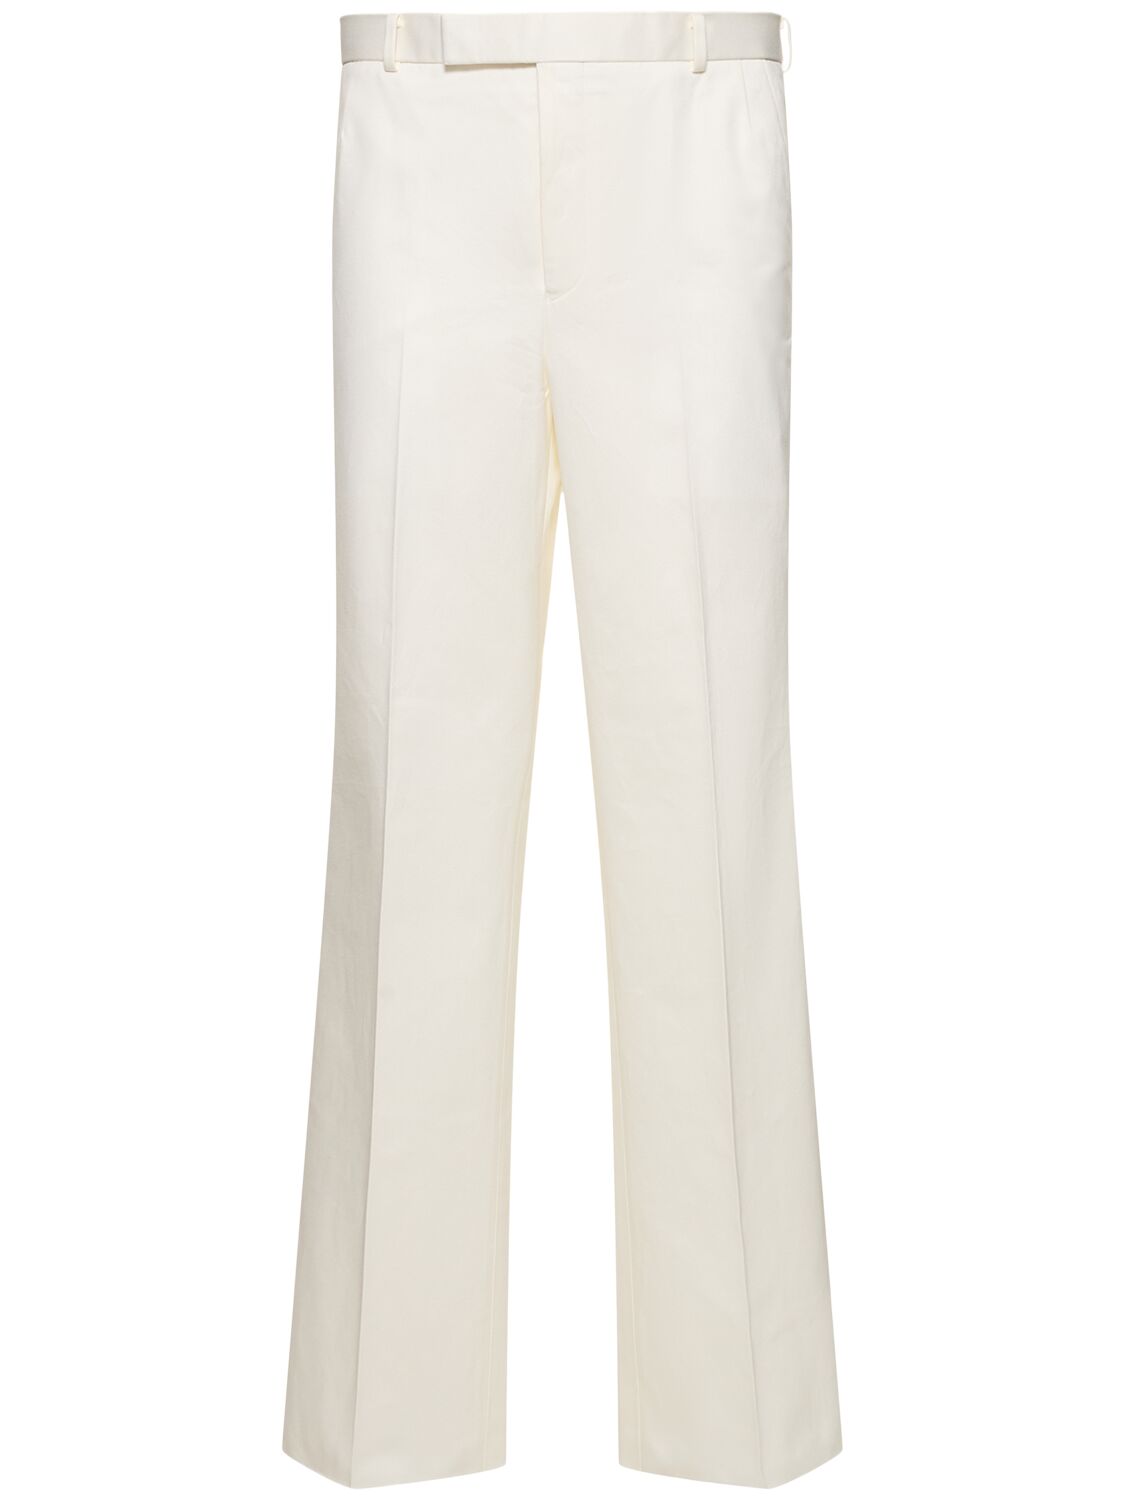 Pantalon Taille Basse En Coton Avec Ceinture - THOM BROWNE - Modalova